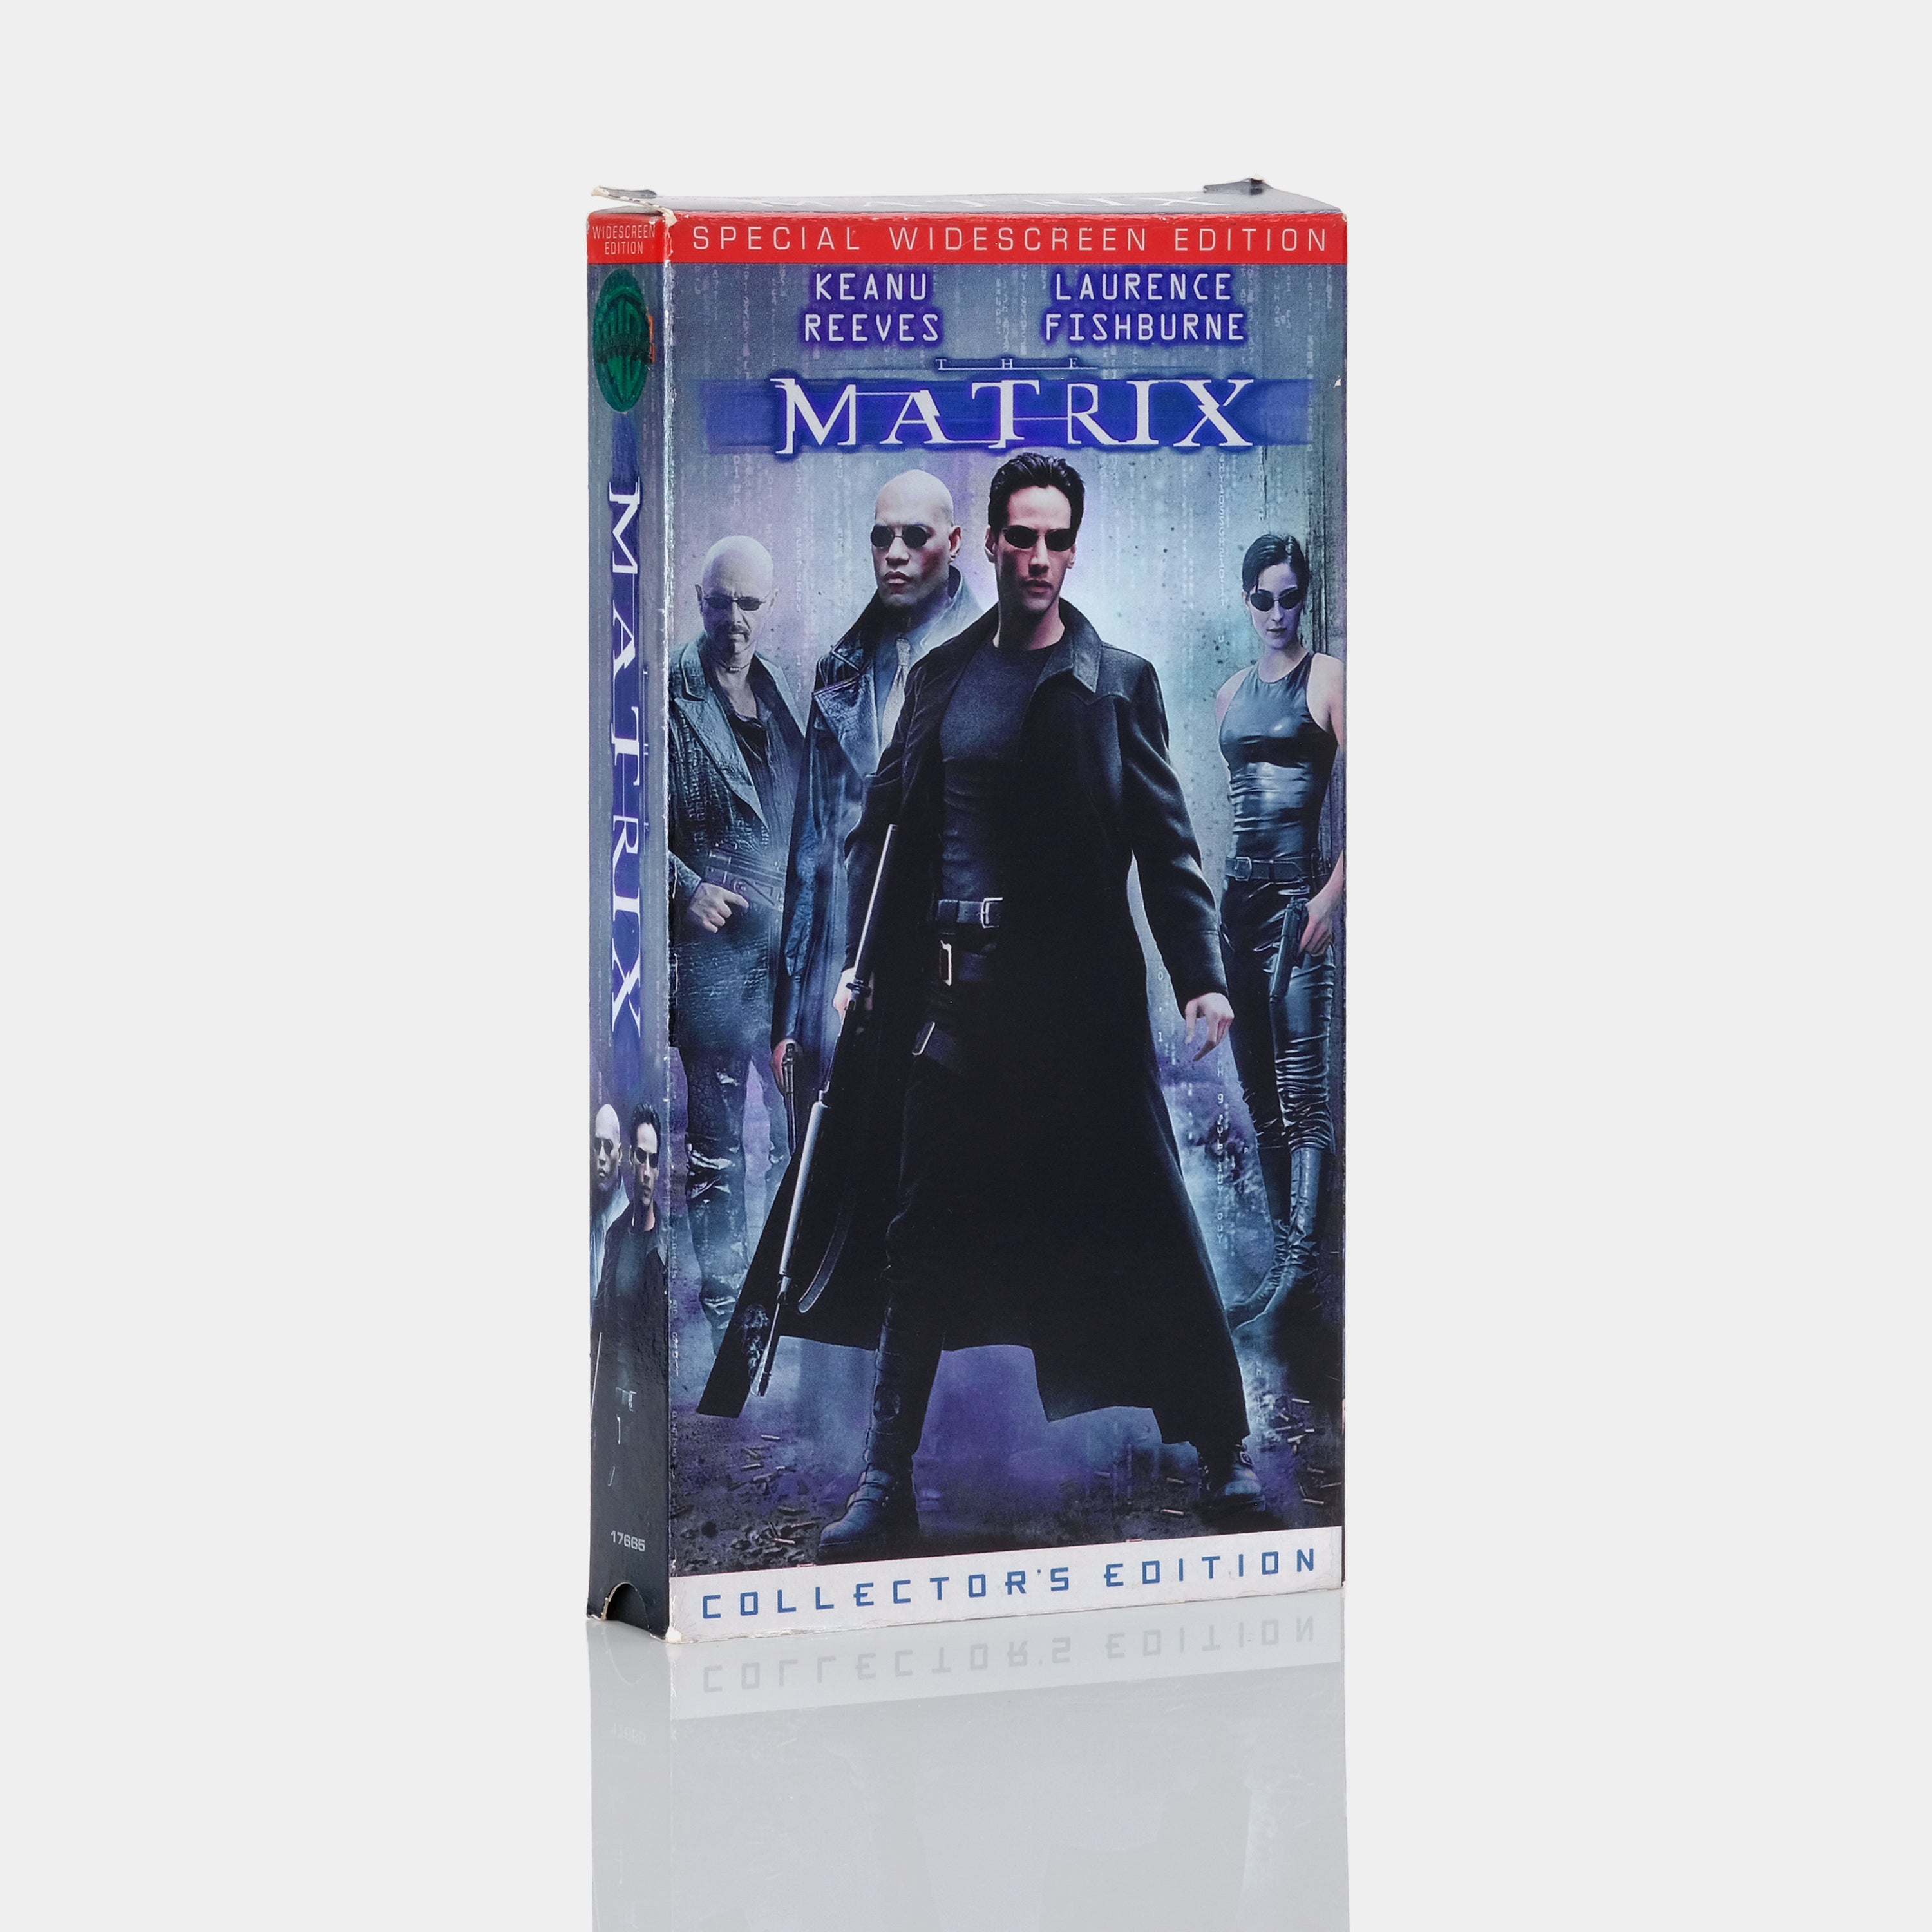 The Matrix VHS Tape